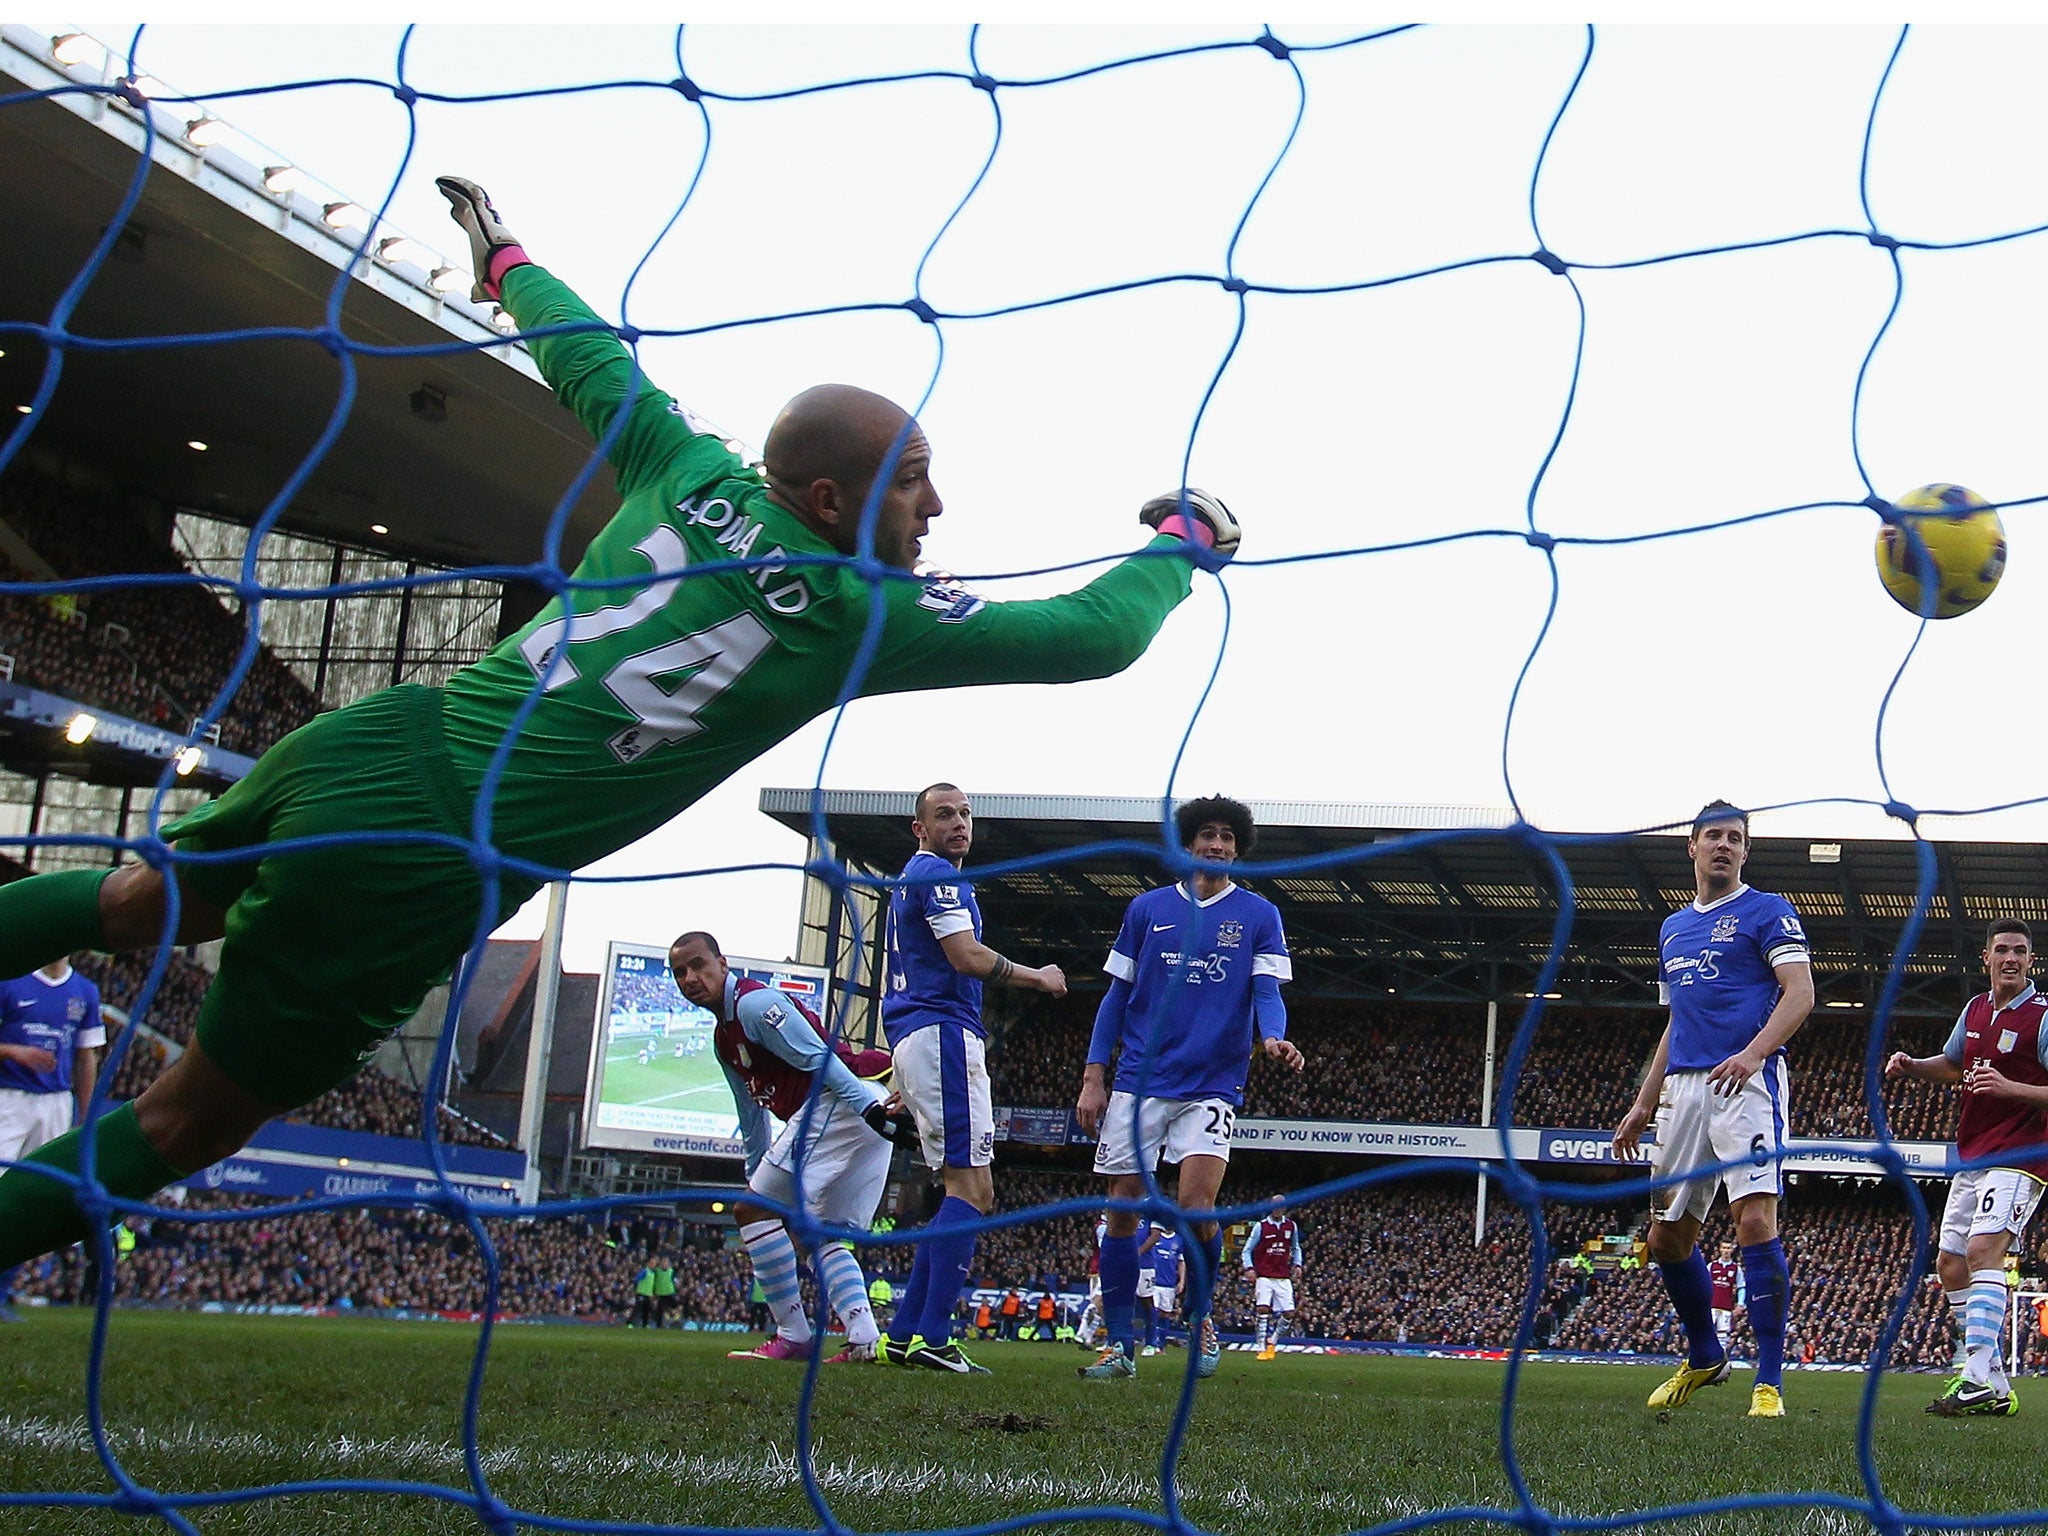 Gabriel Agbonlahor of Aston Villa scores the second goal past Everton keeper Tim Howard